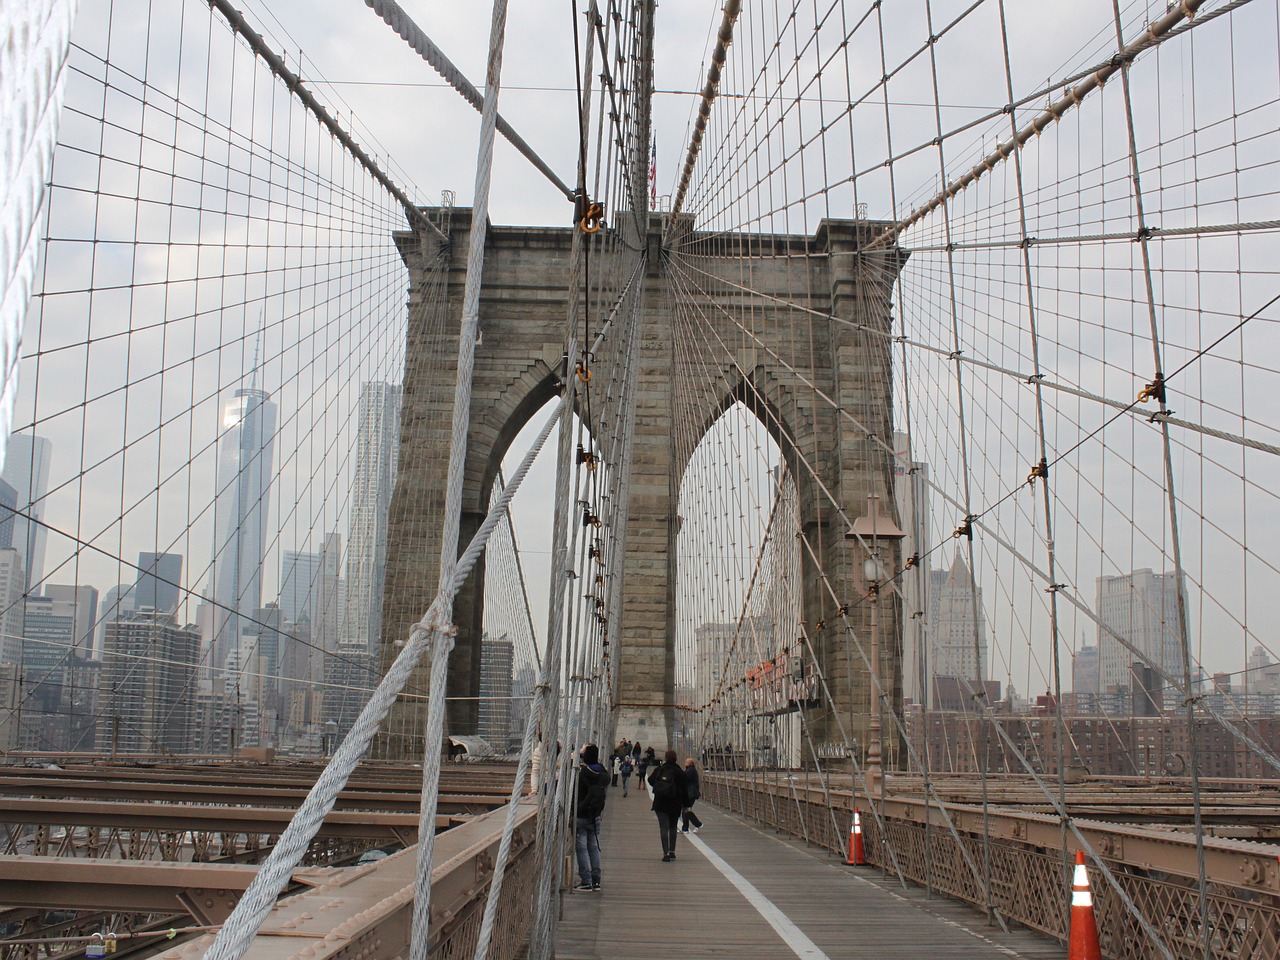 Висячий мост в Нью-Йорке. Бруклинский мост арка. Мост на тросах в Америке. Бруклин подвесной мост. They the new bridge